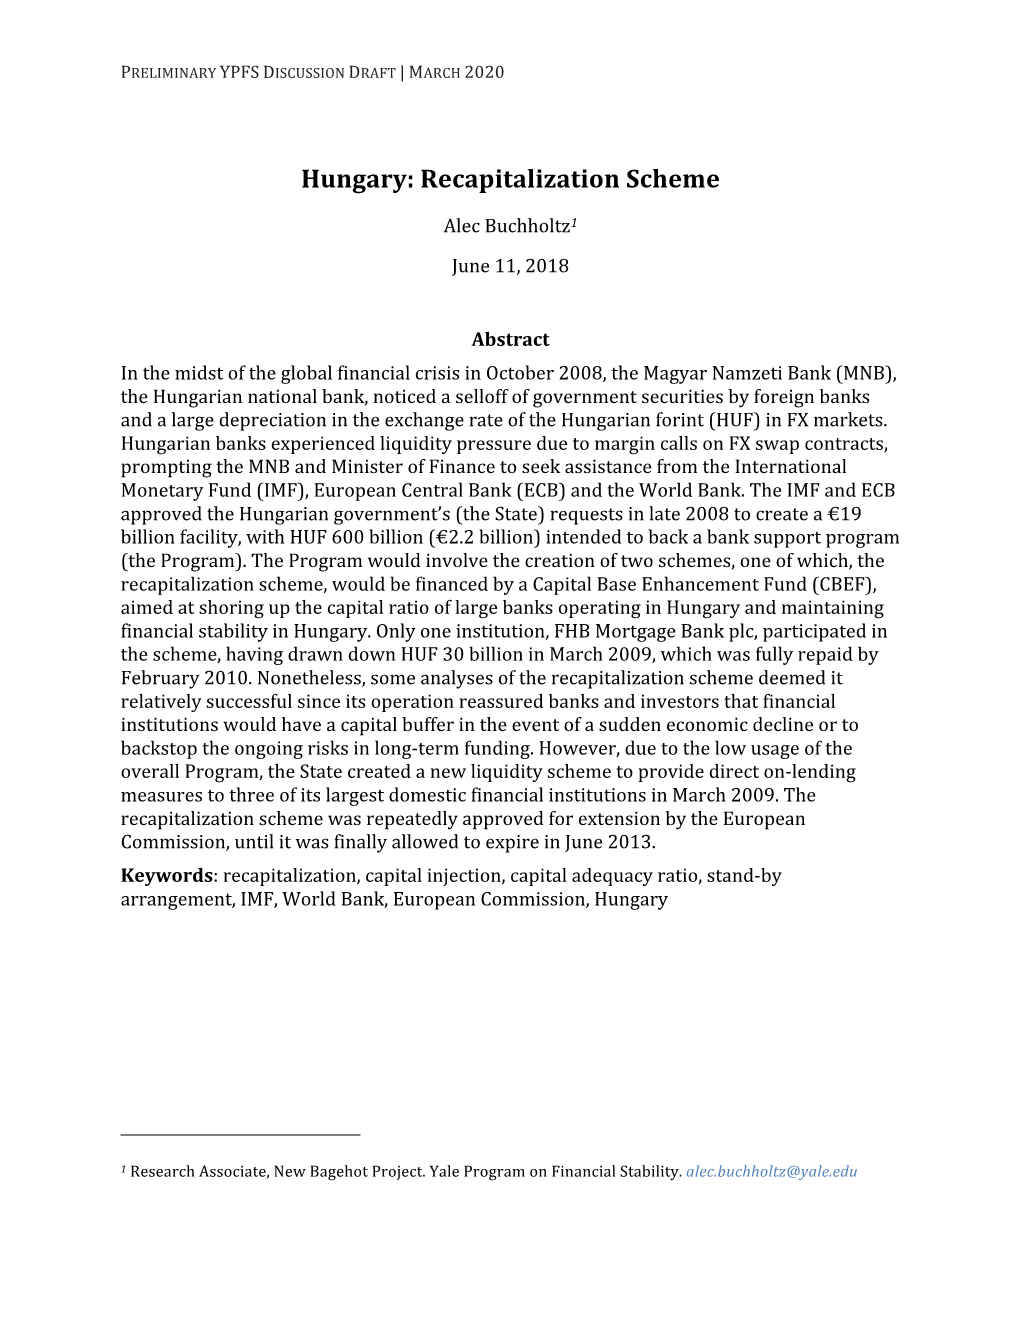 Hungary: Recapitalization Scheme